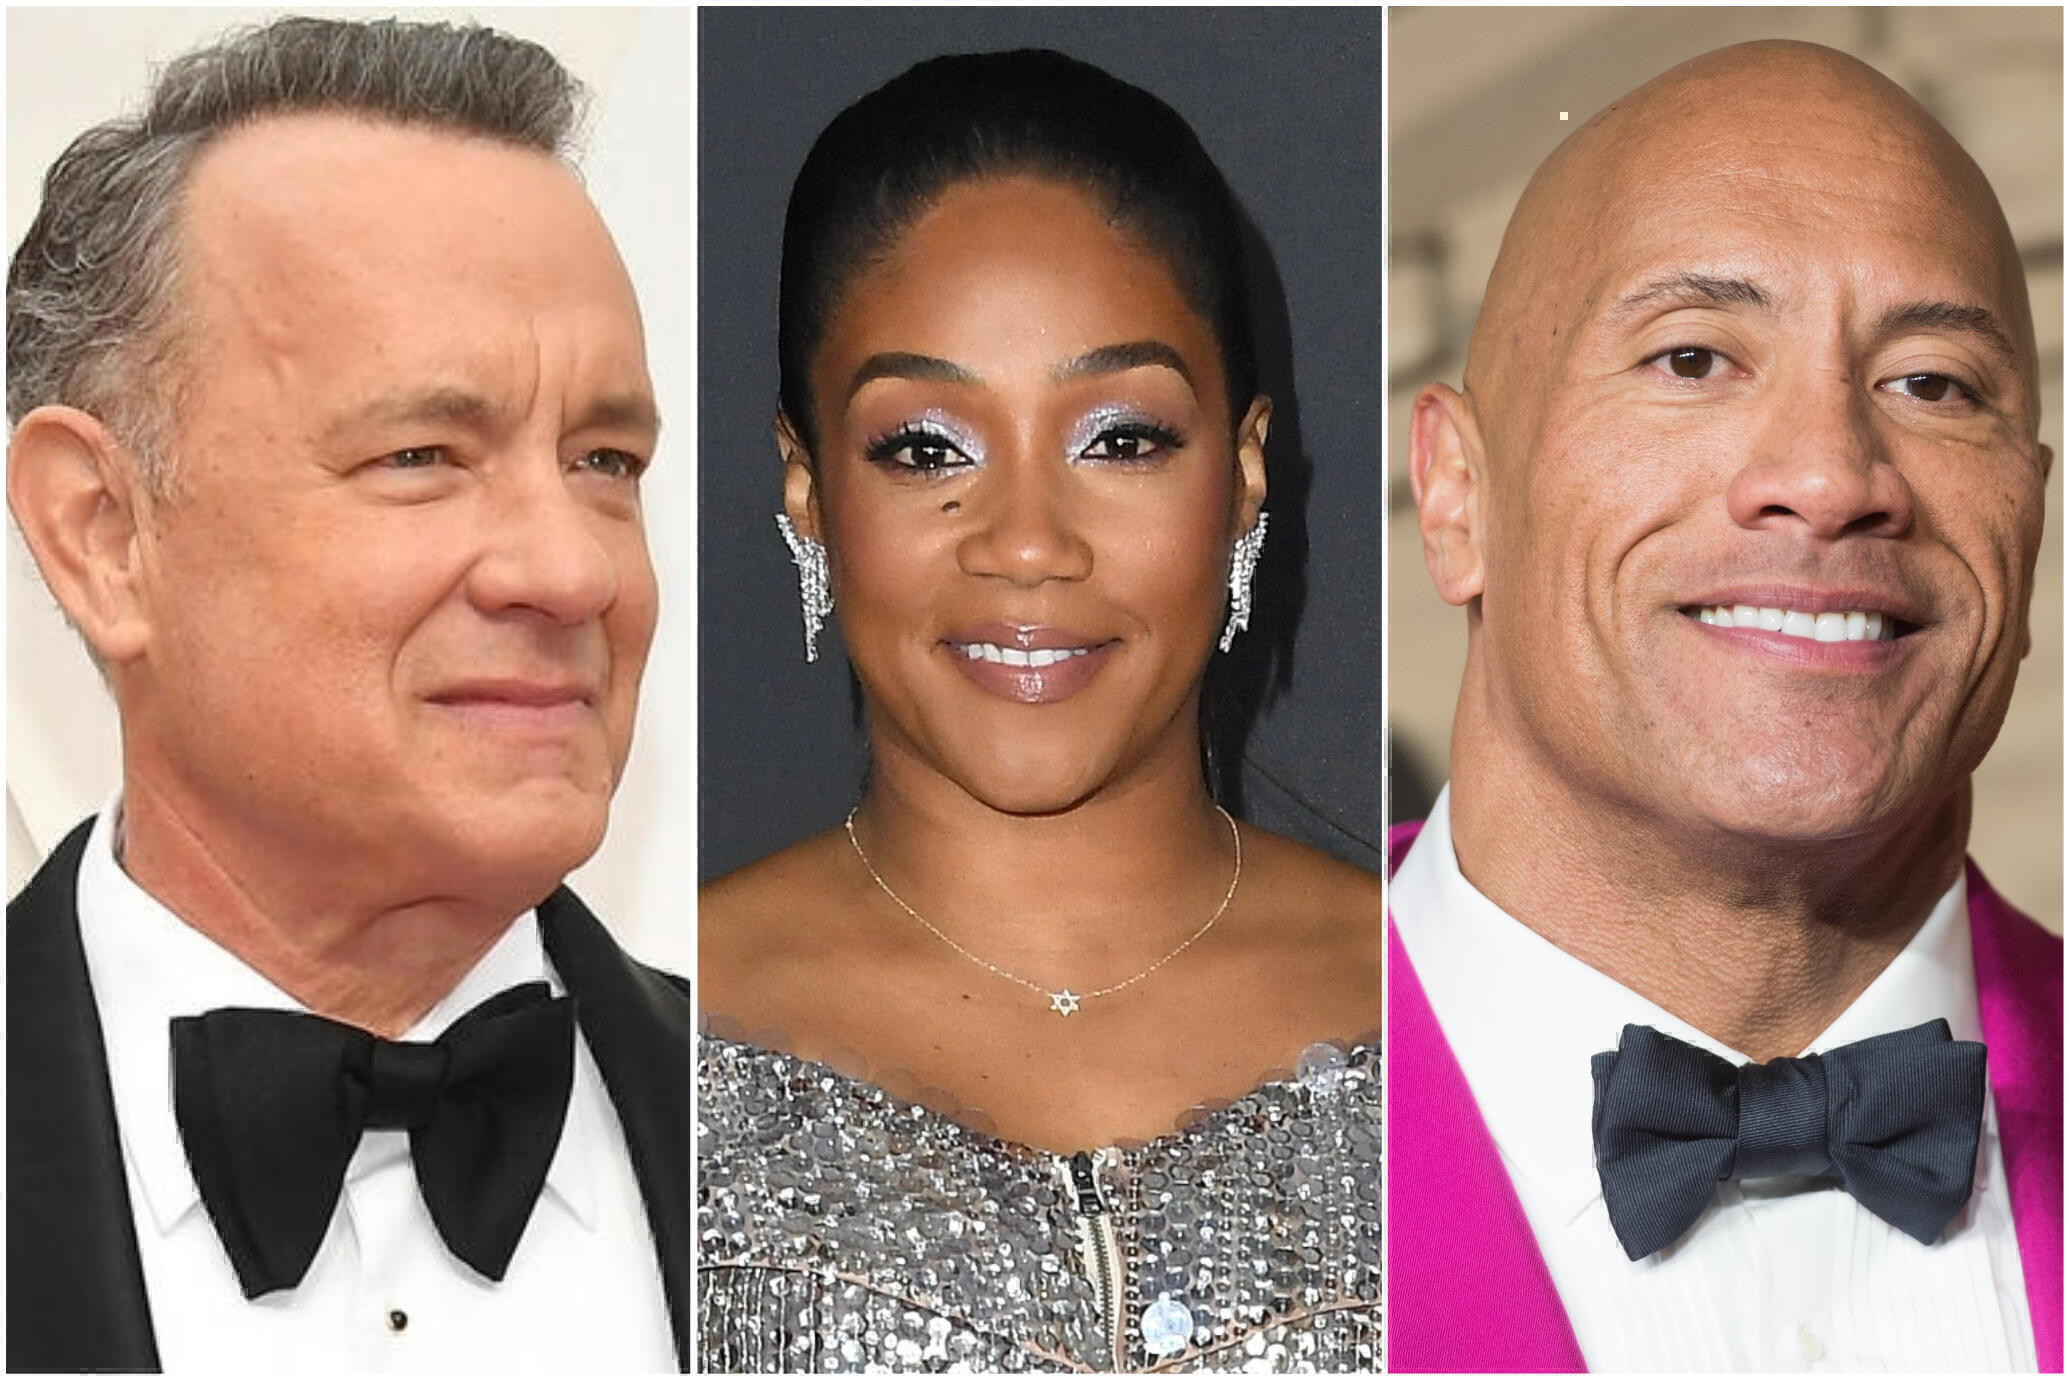 Tom Hanks, Tiffany Haddish, and Dwayne "The Rock" Johnson